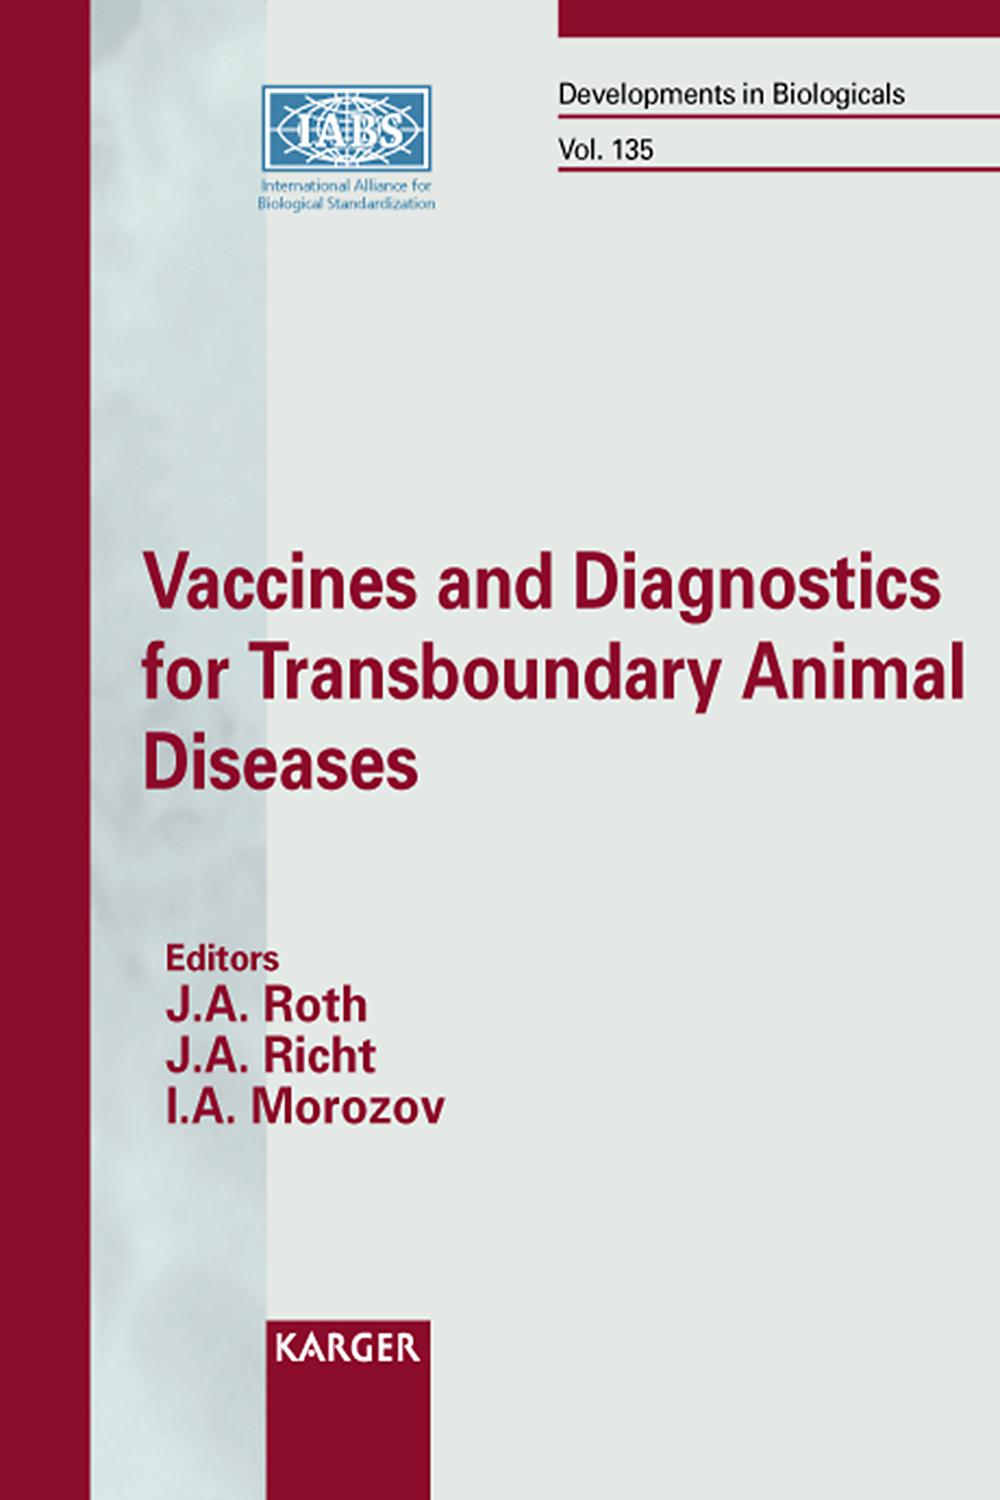 Vaccines and Diagnostics for Transboundary Animal Diseases - J. A. Roth, J. A. Richt, I. A. Morozov